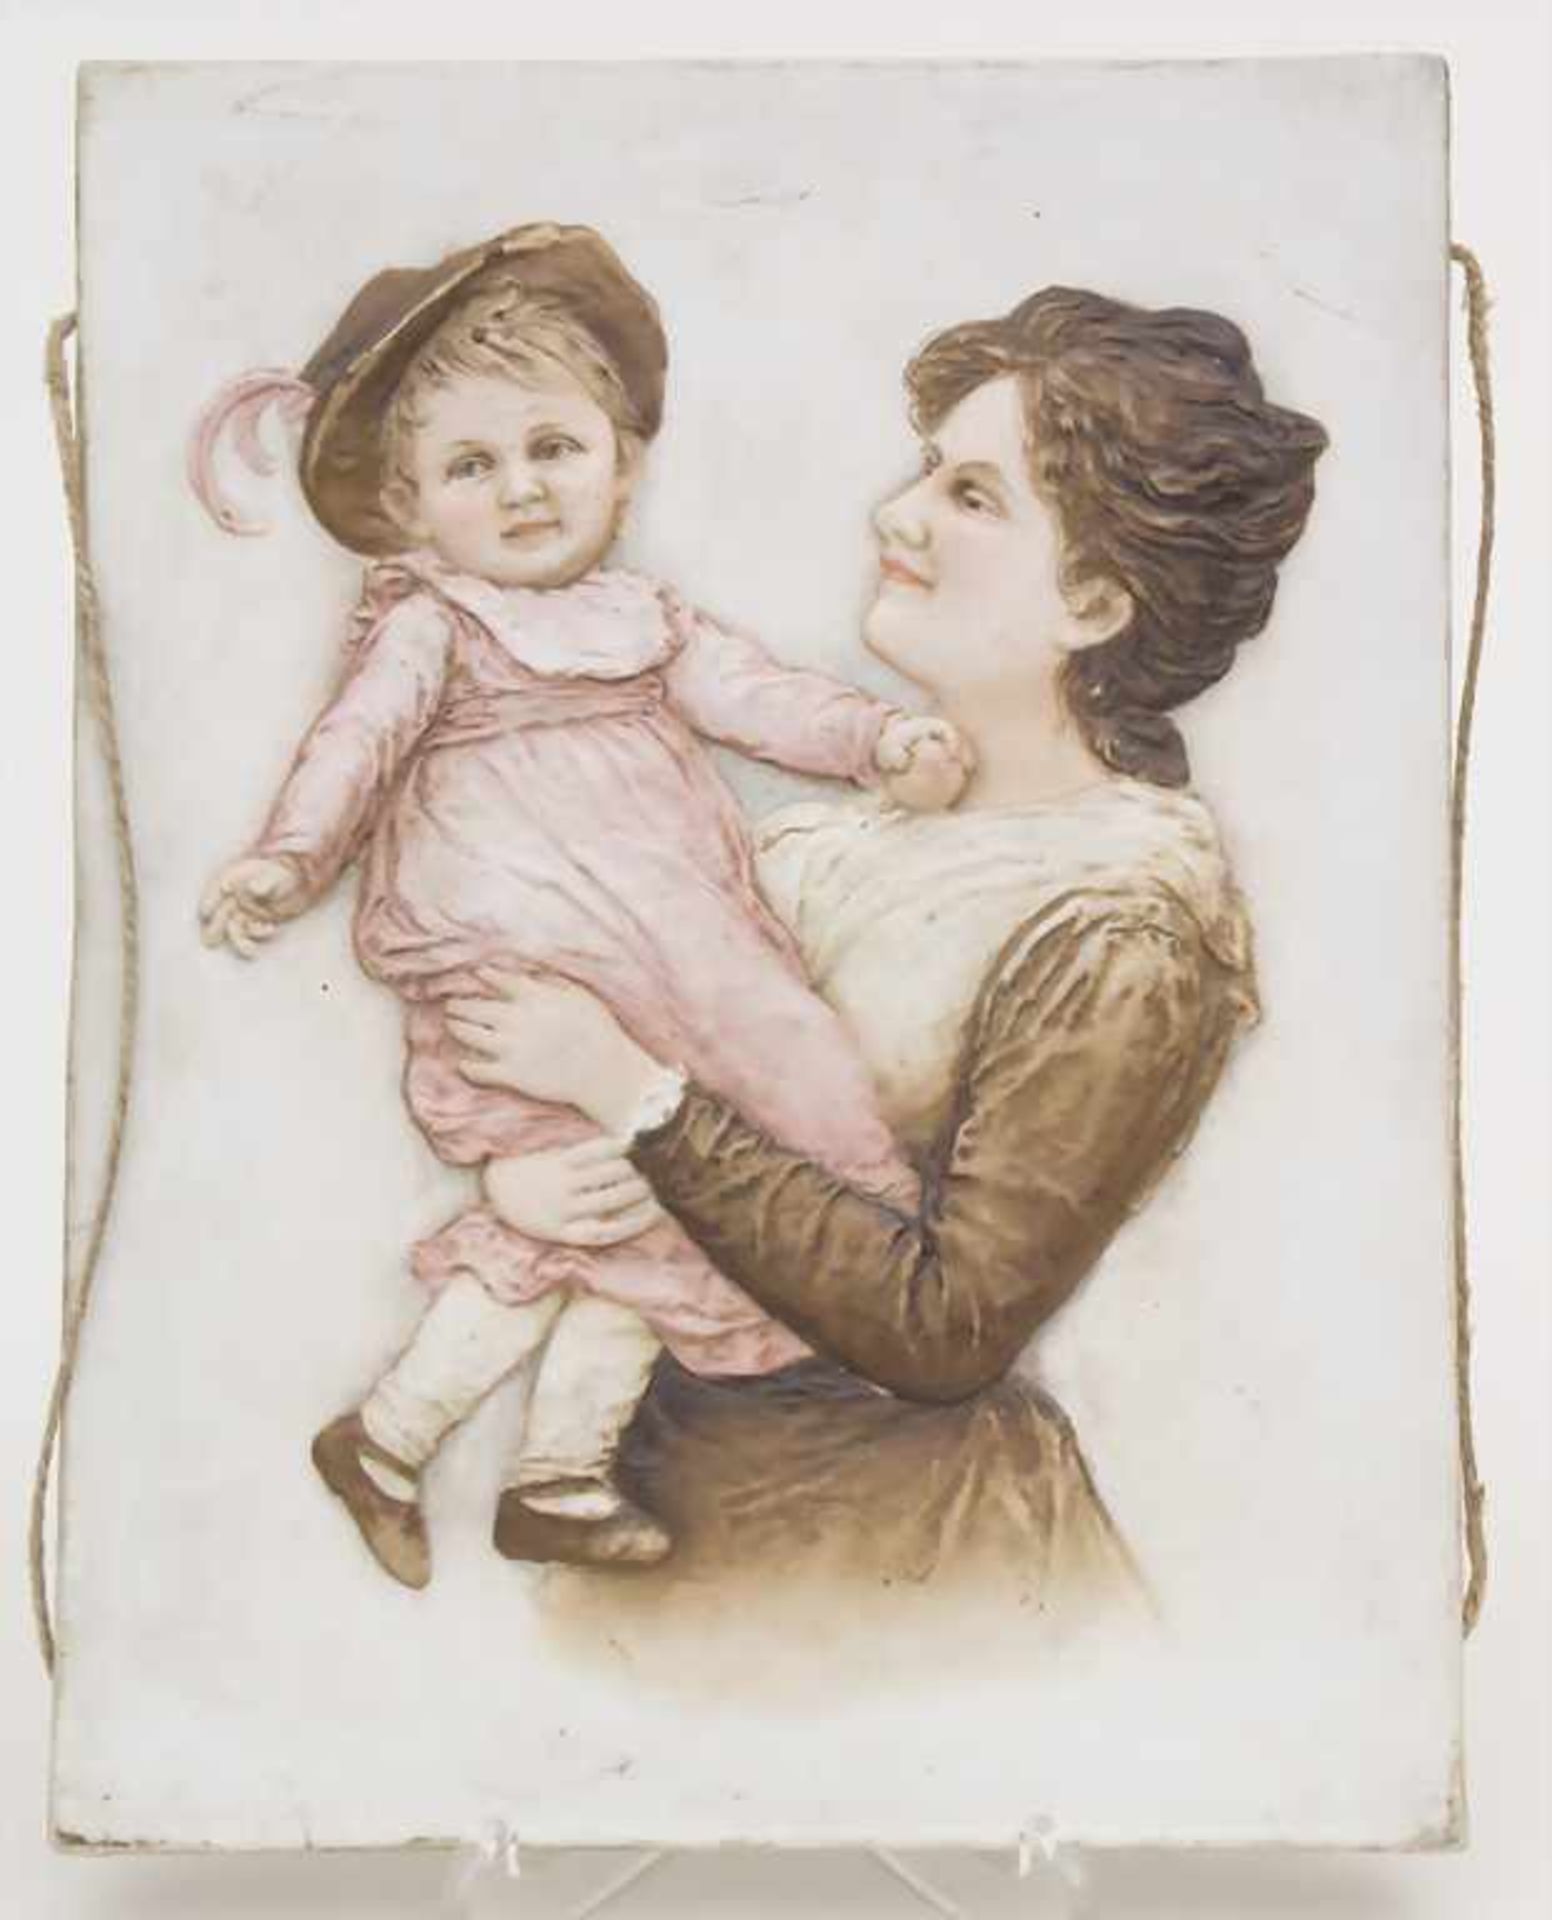 Biskuit Bildreliefplatte 'Mutter und Tochter' / A bisquit relief picture 'Mother and daughter', wohl